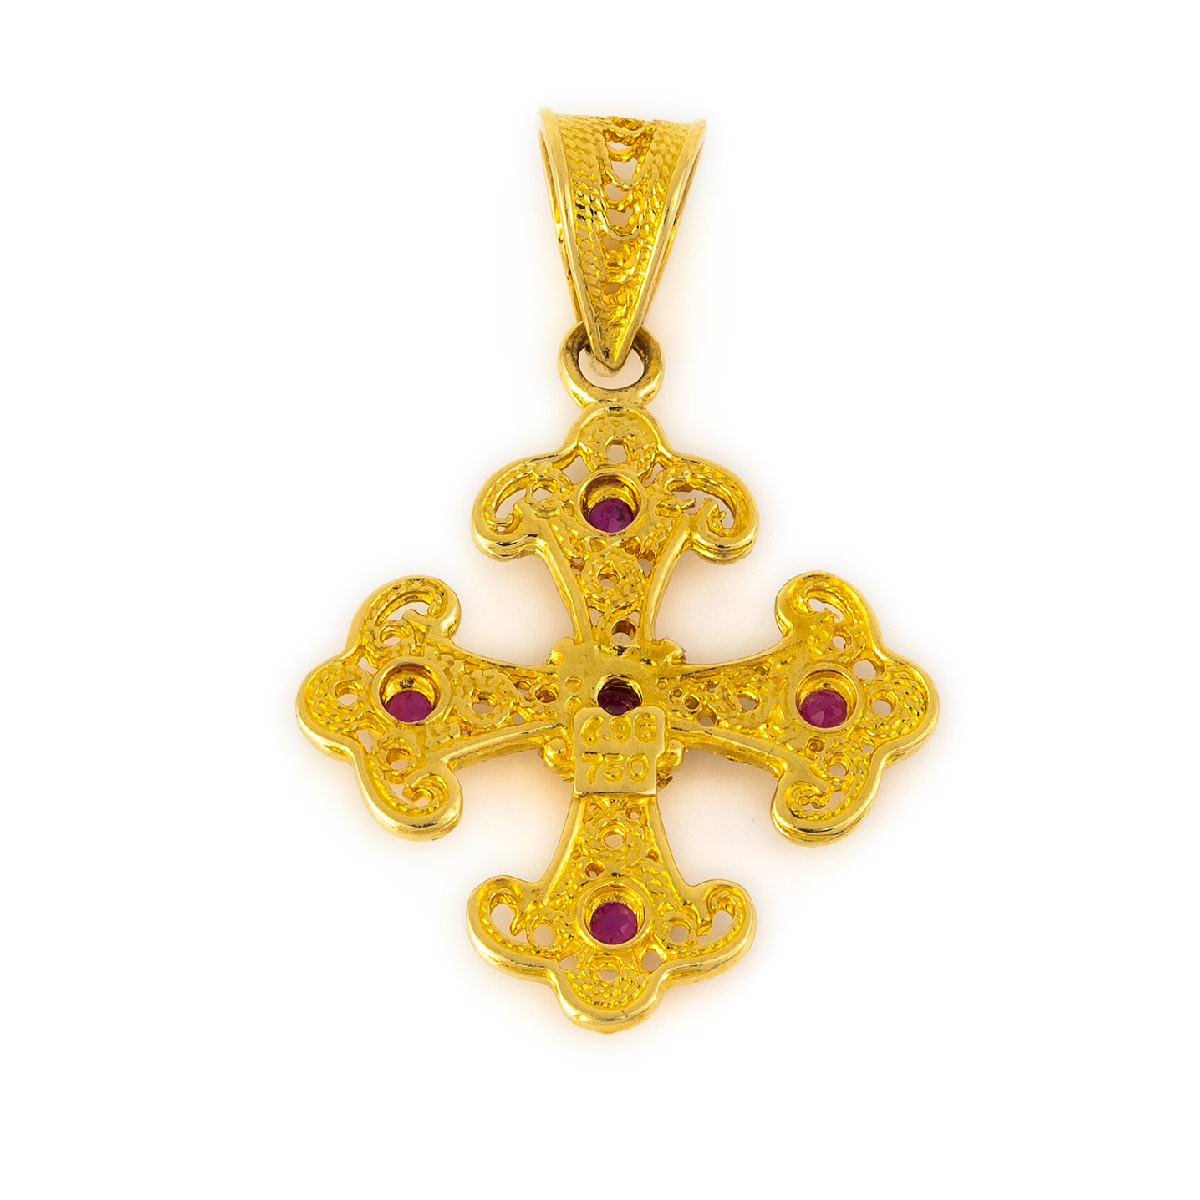 18K Solid Gold Filigree Cross Pendant with Gemstones - GREEK